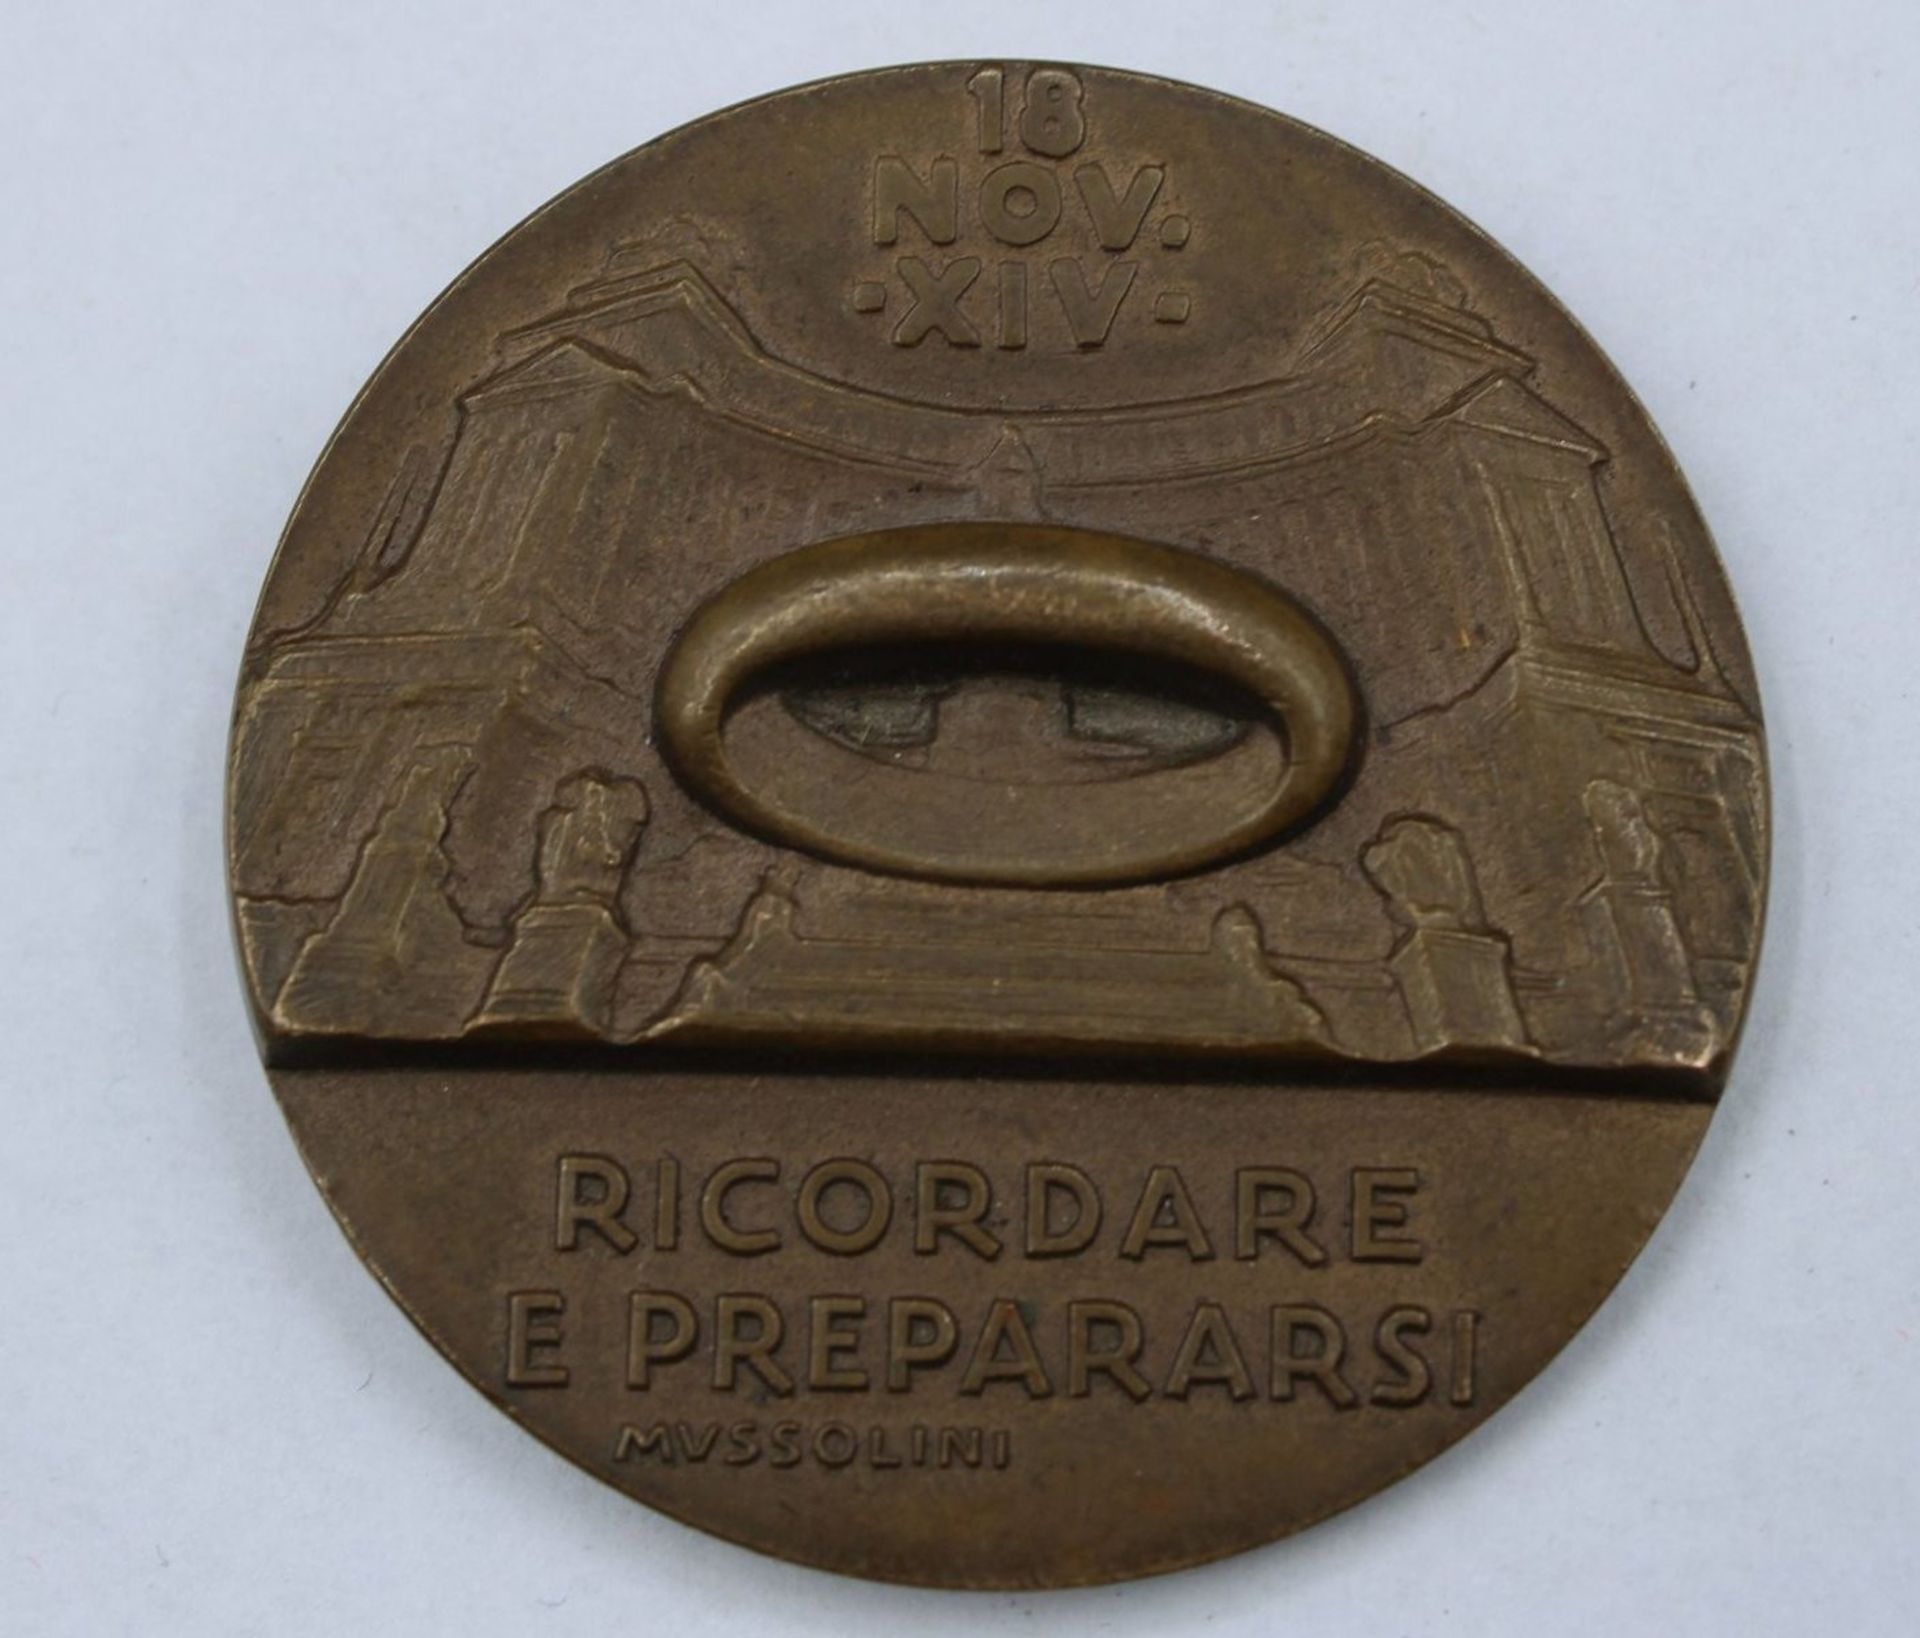 Medaille o.ä., Italien, signiert "E.Monzi", Profil Musollini, Bronze, D-4,5cm. - Bild 2 aus 2